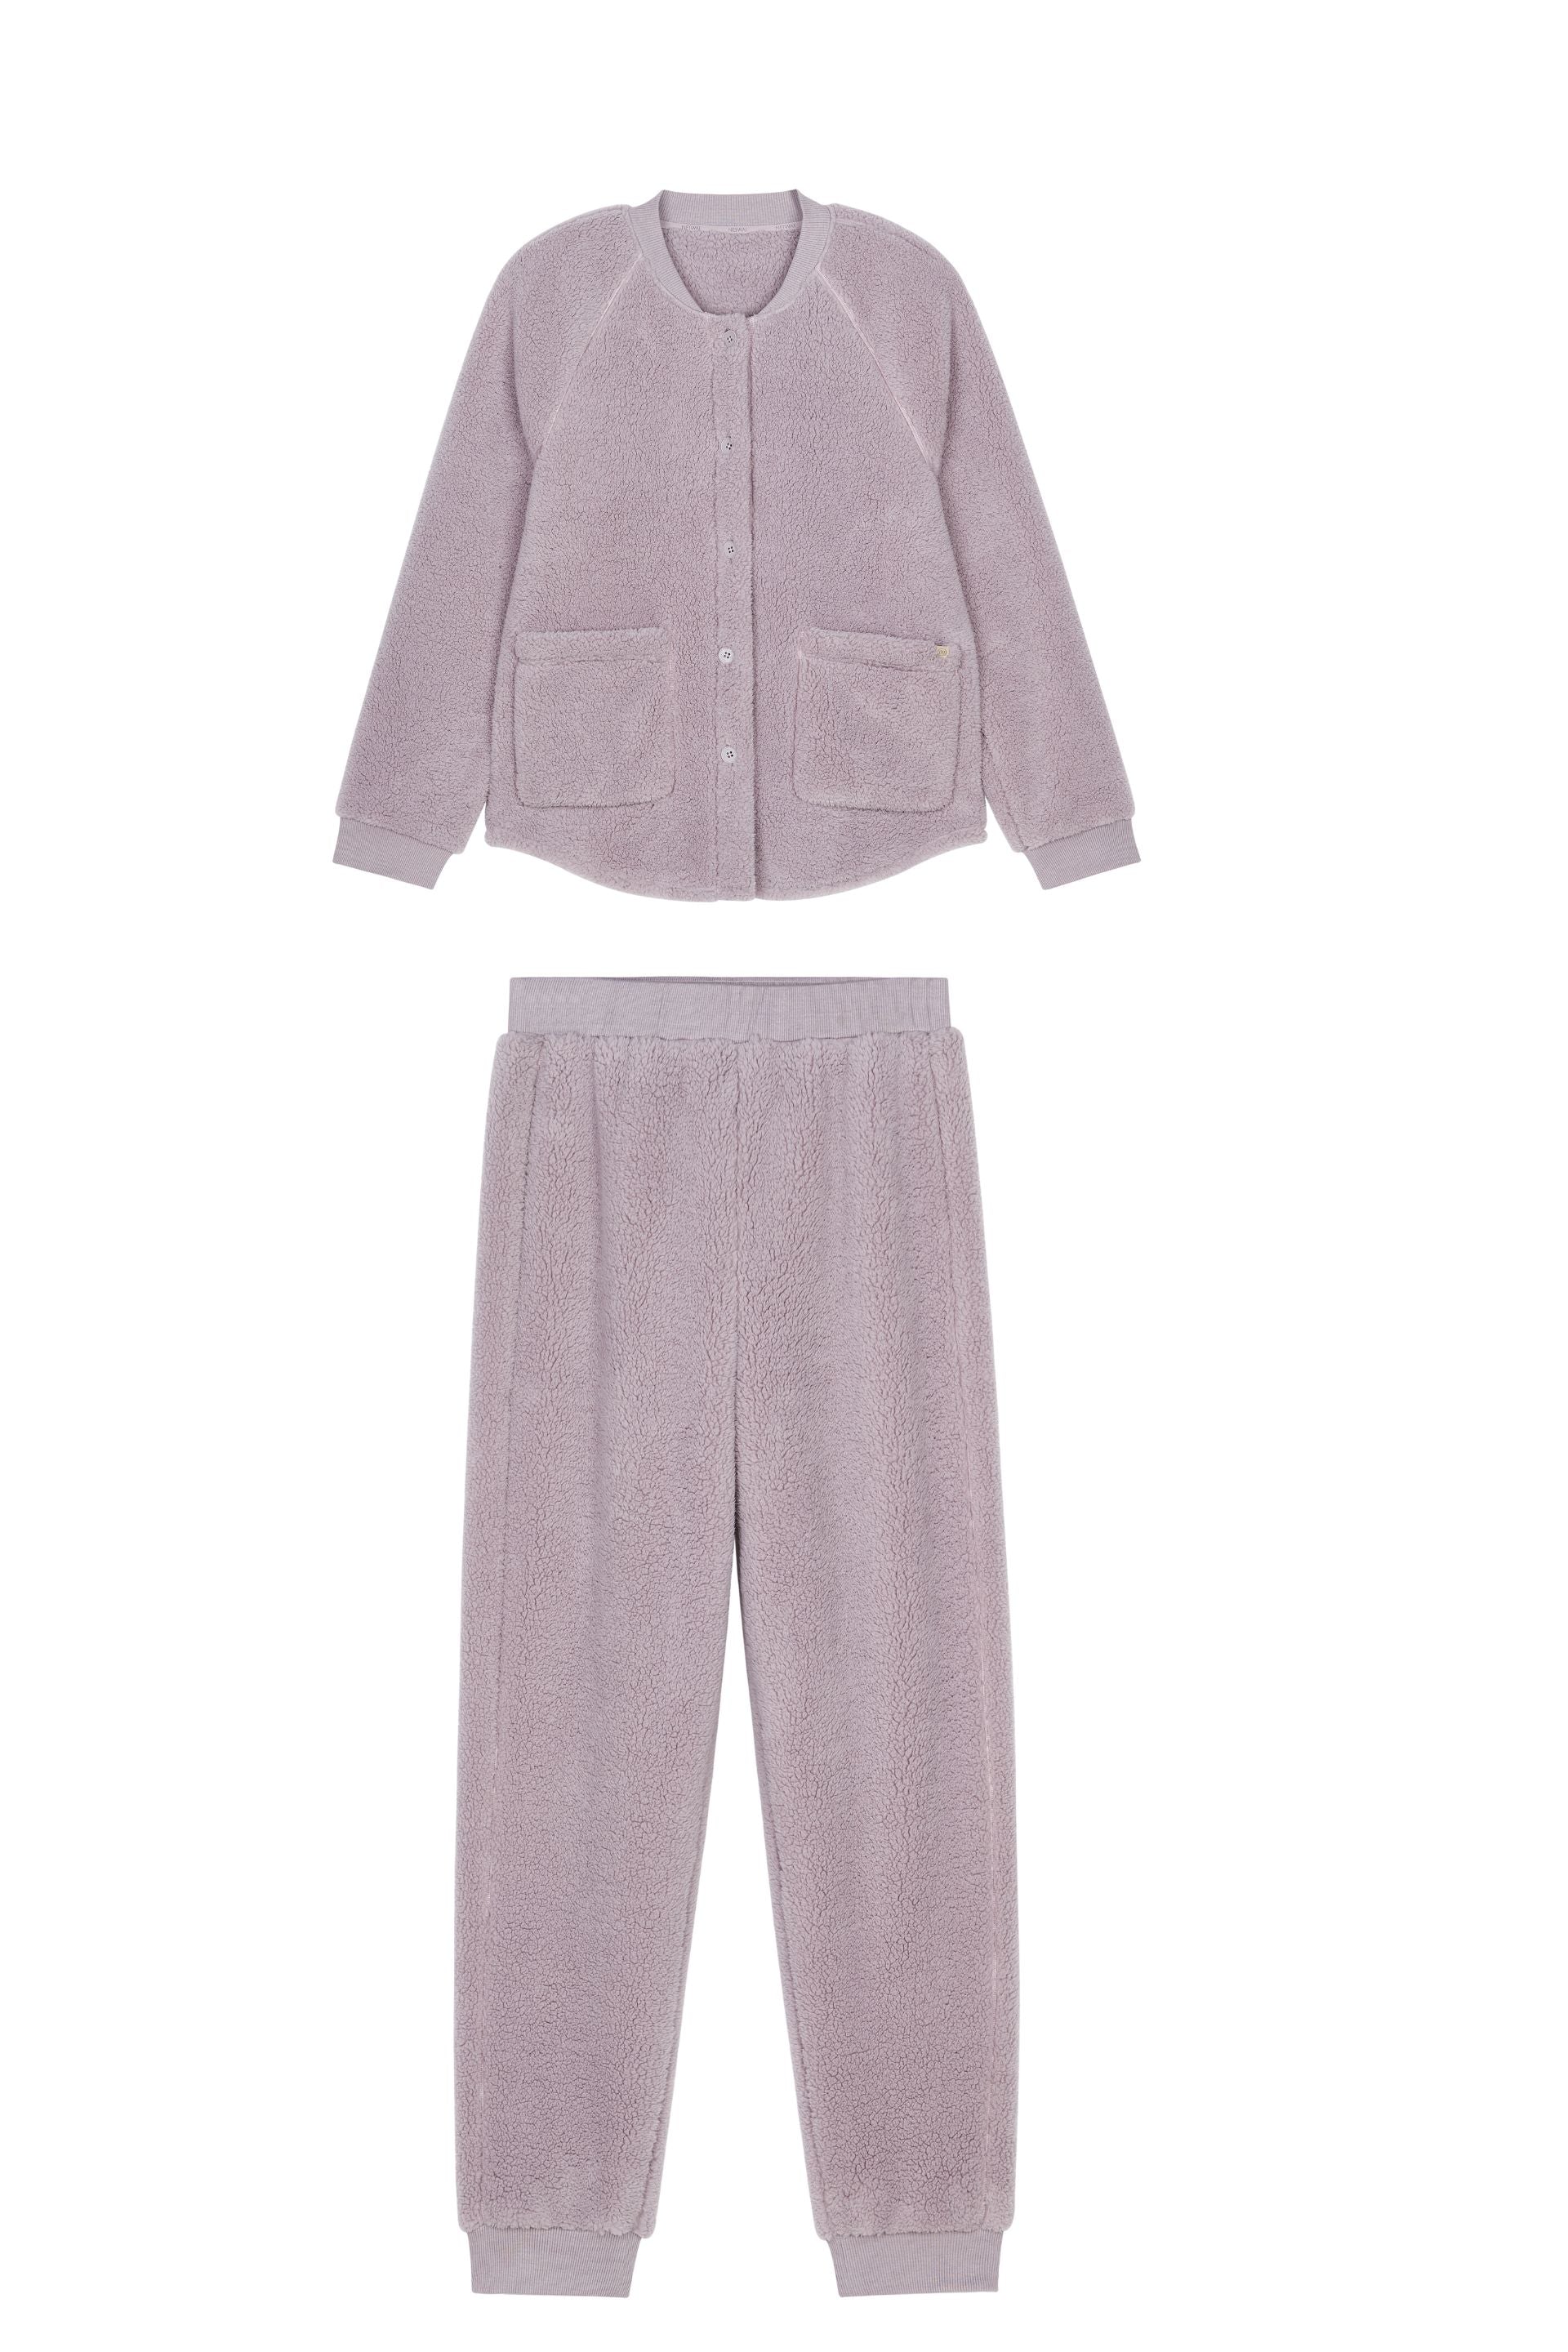 The purple Fleece Pajama set